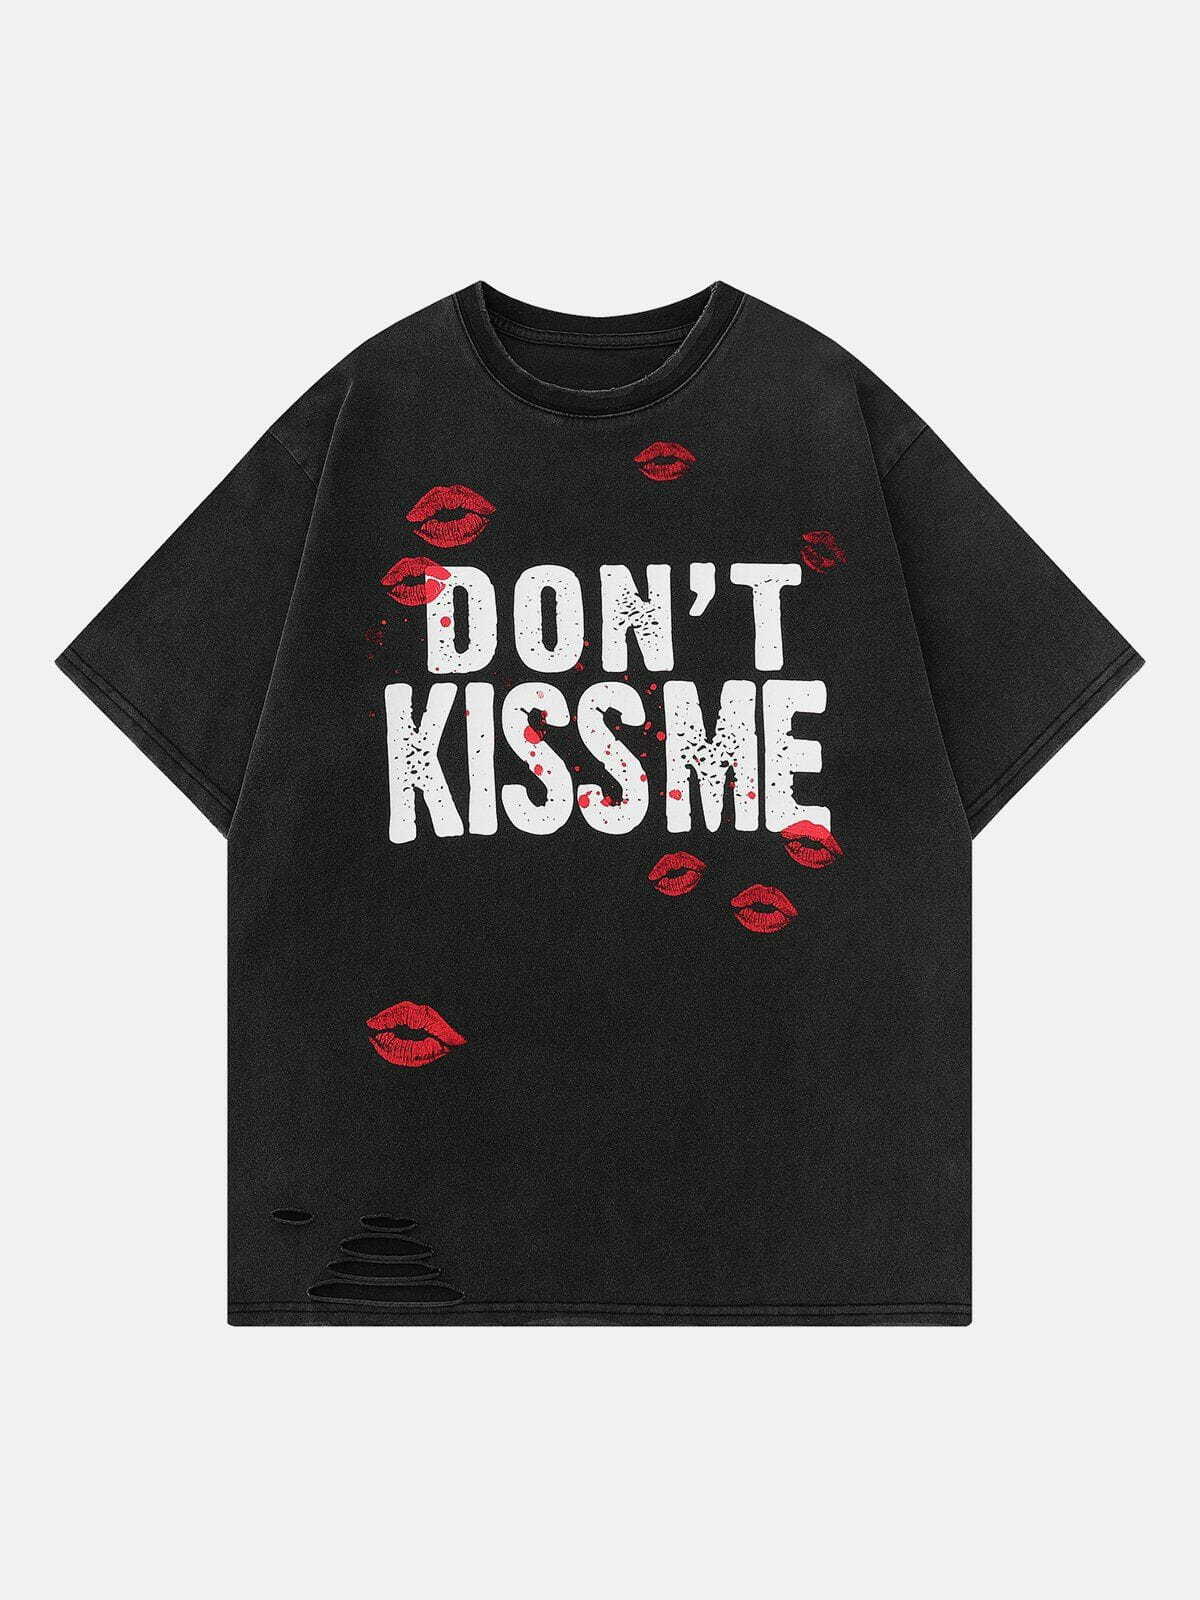 edgy kisses print tee youthful  retro streetwear essential 1084